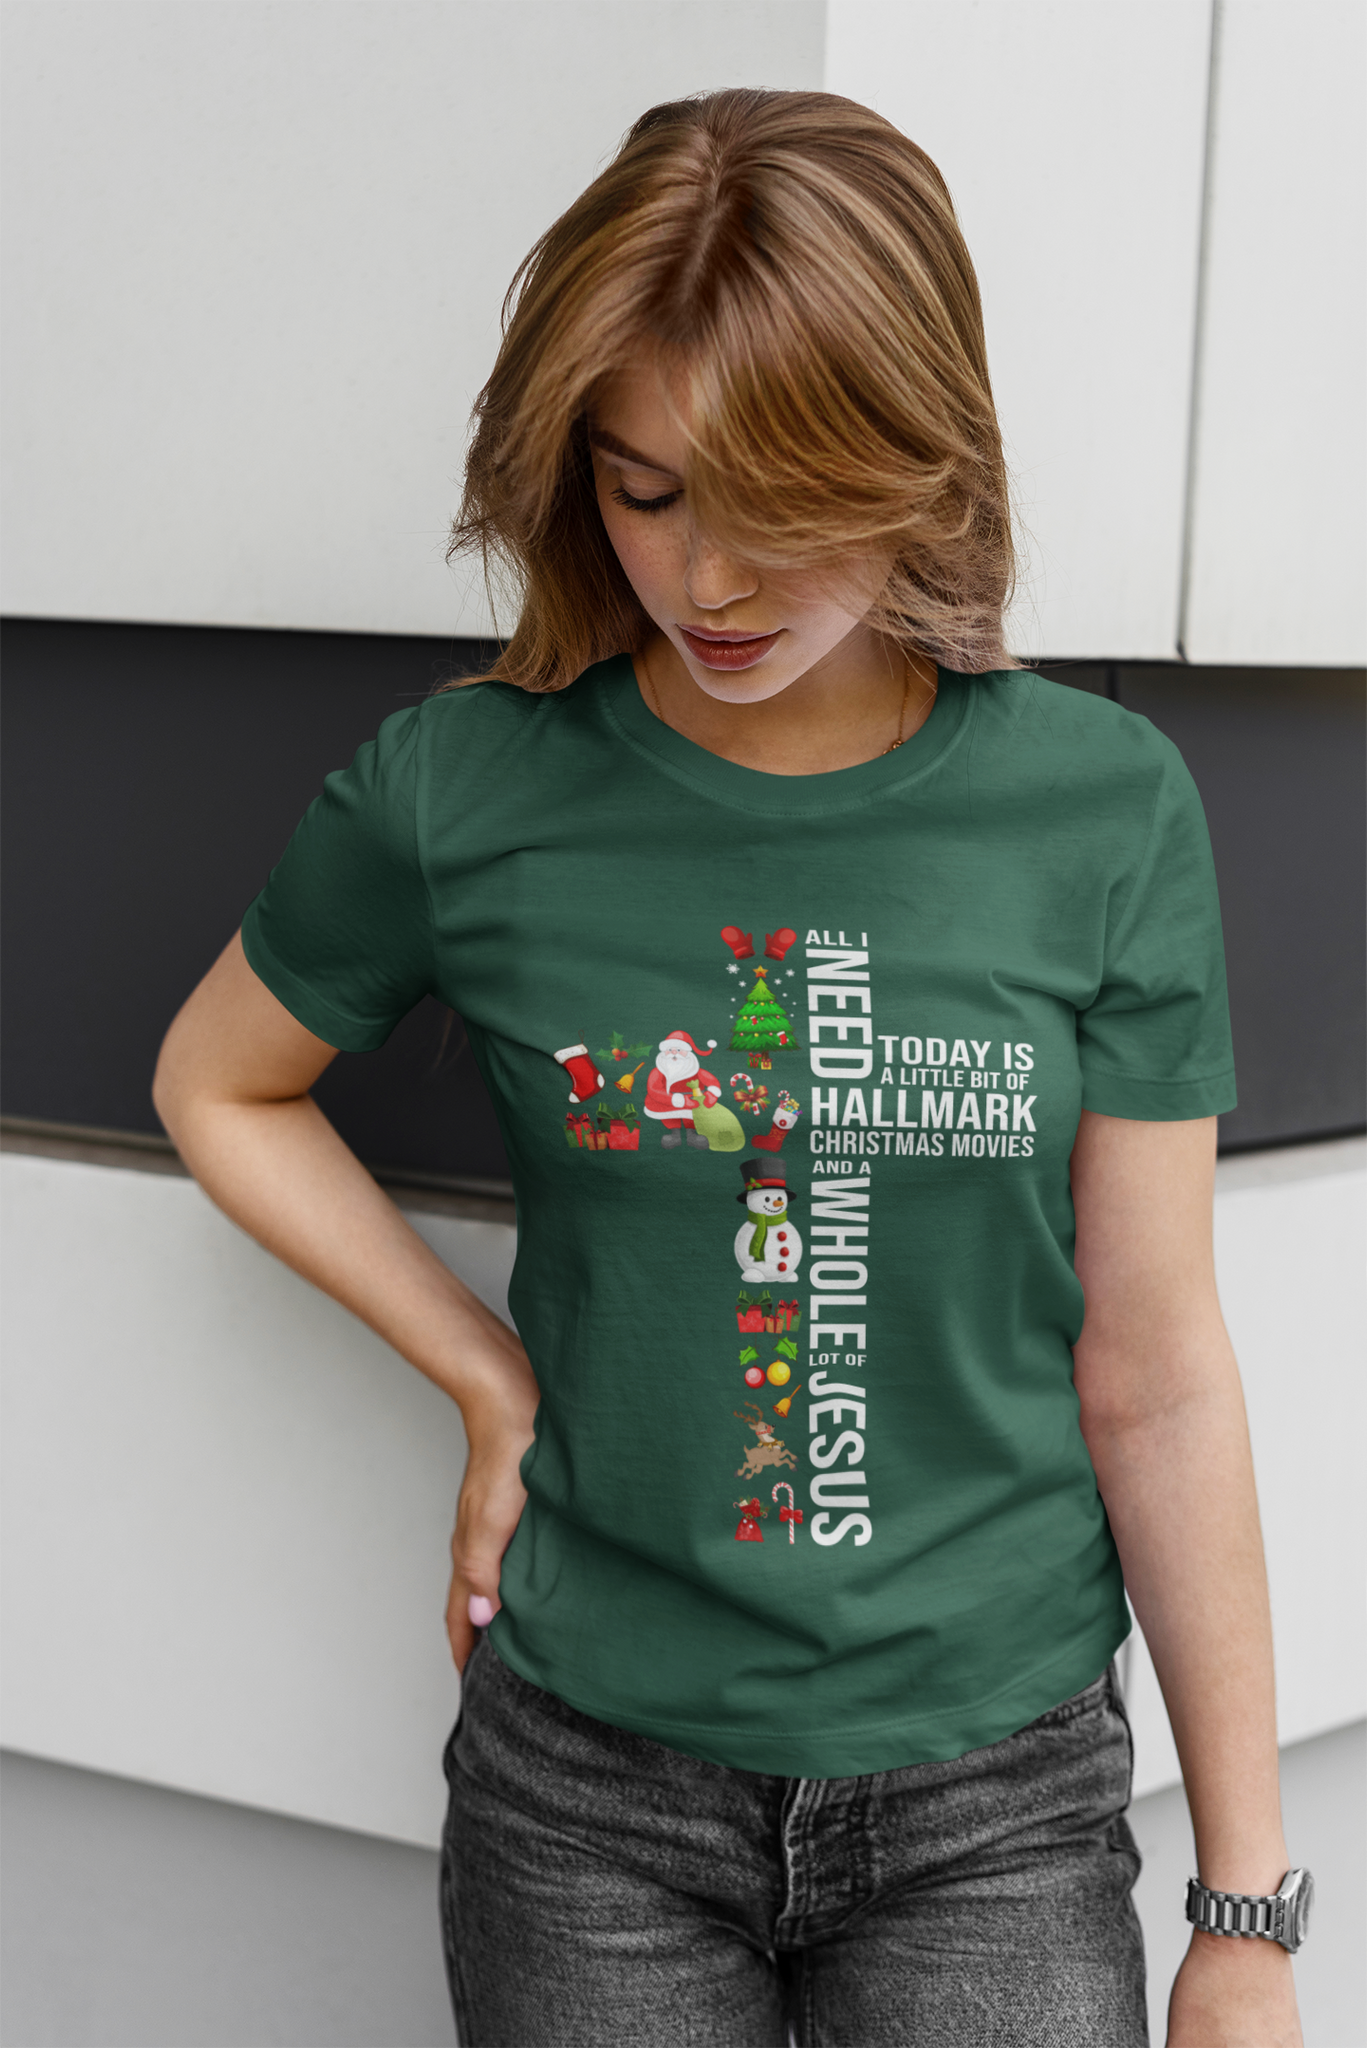 Hallmark Christmas Tshirt, All I Need Today Is A Little Bit Of Hallmark Christmas Movies Shirt, Christmas Gifts